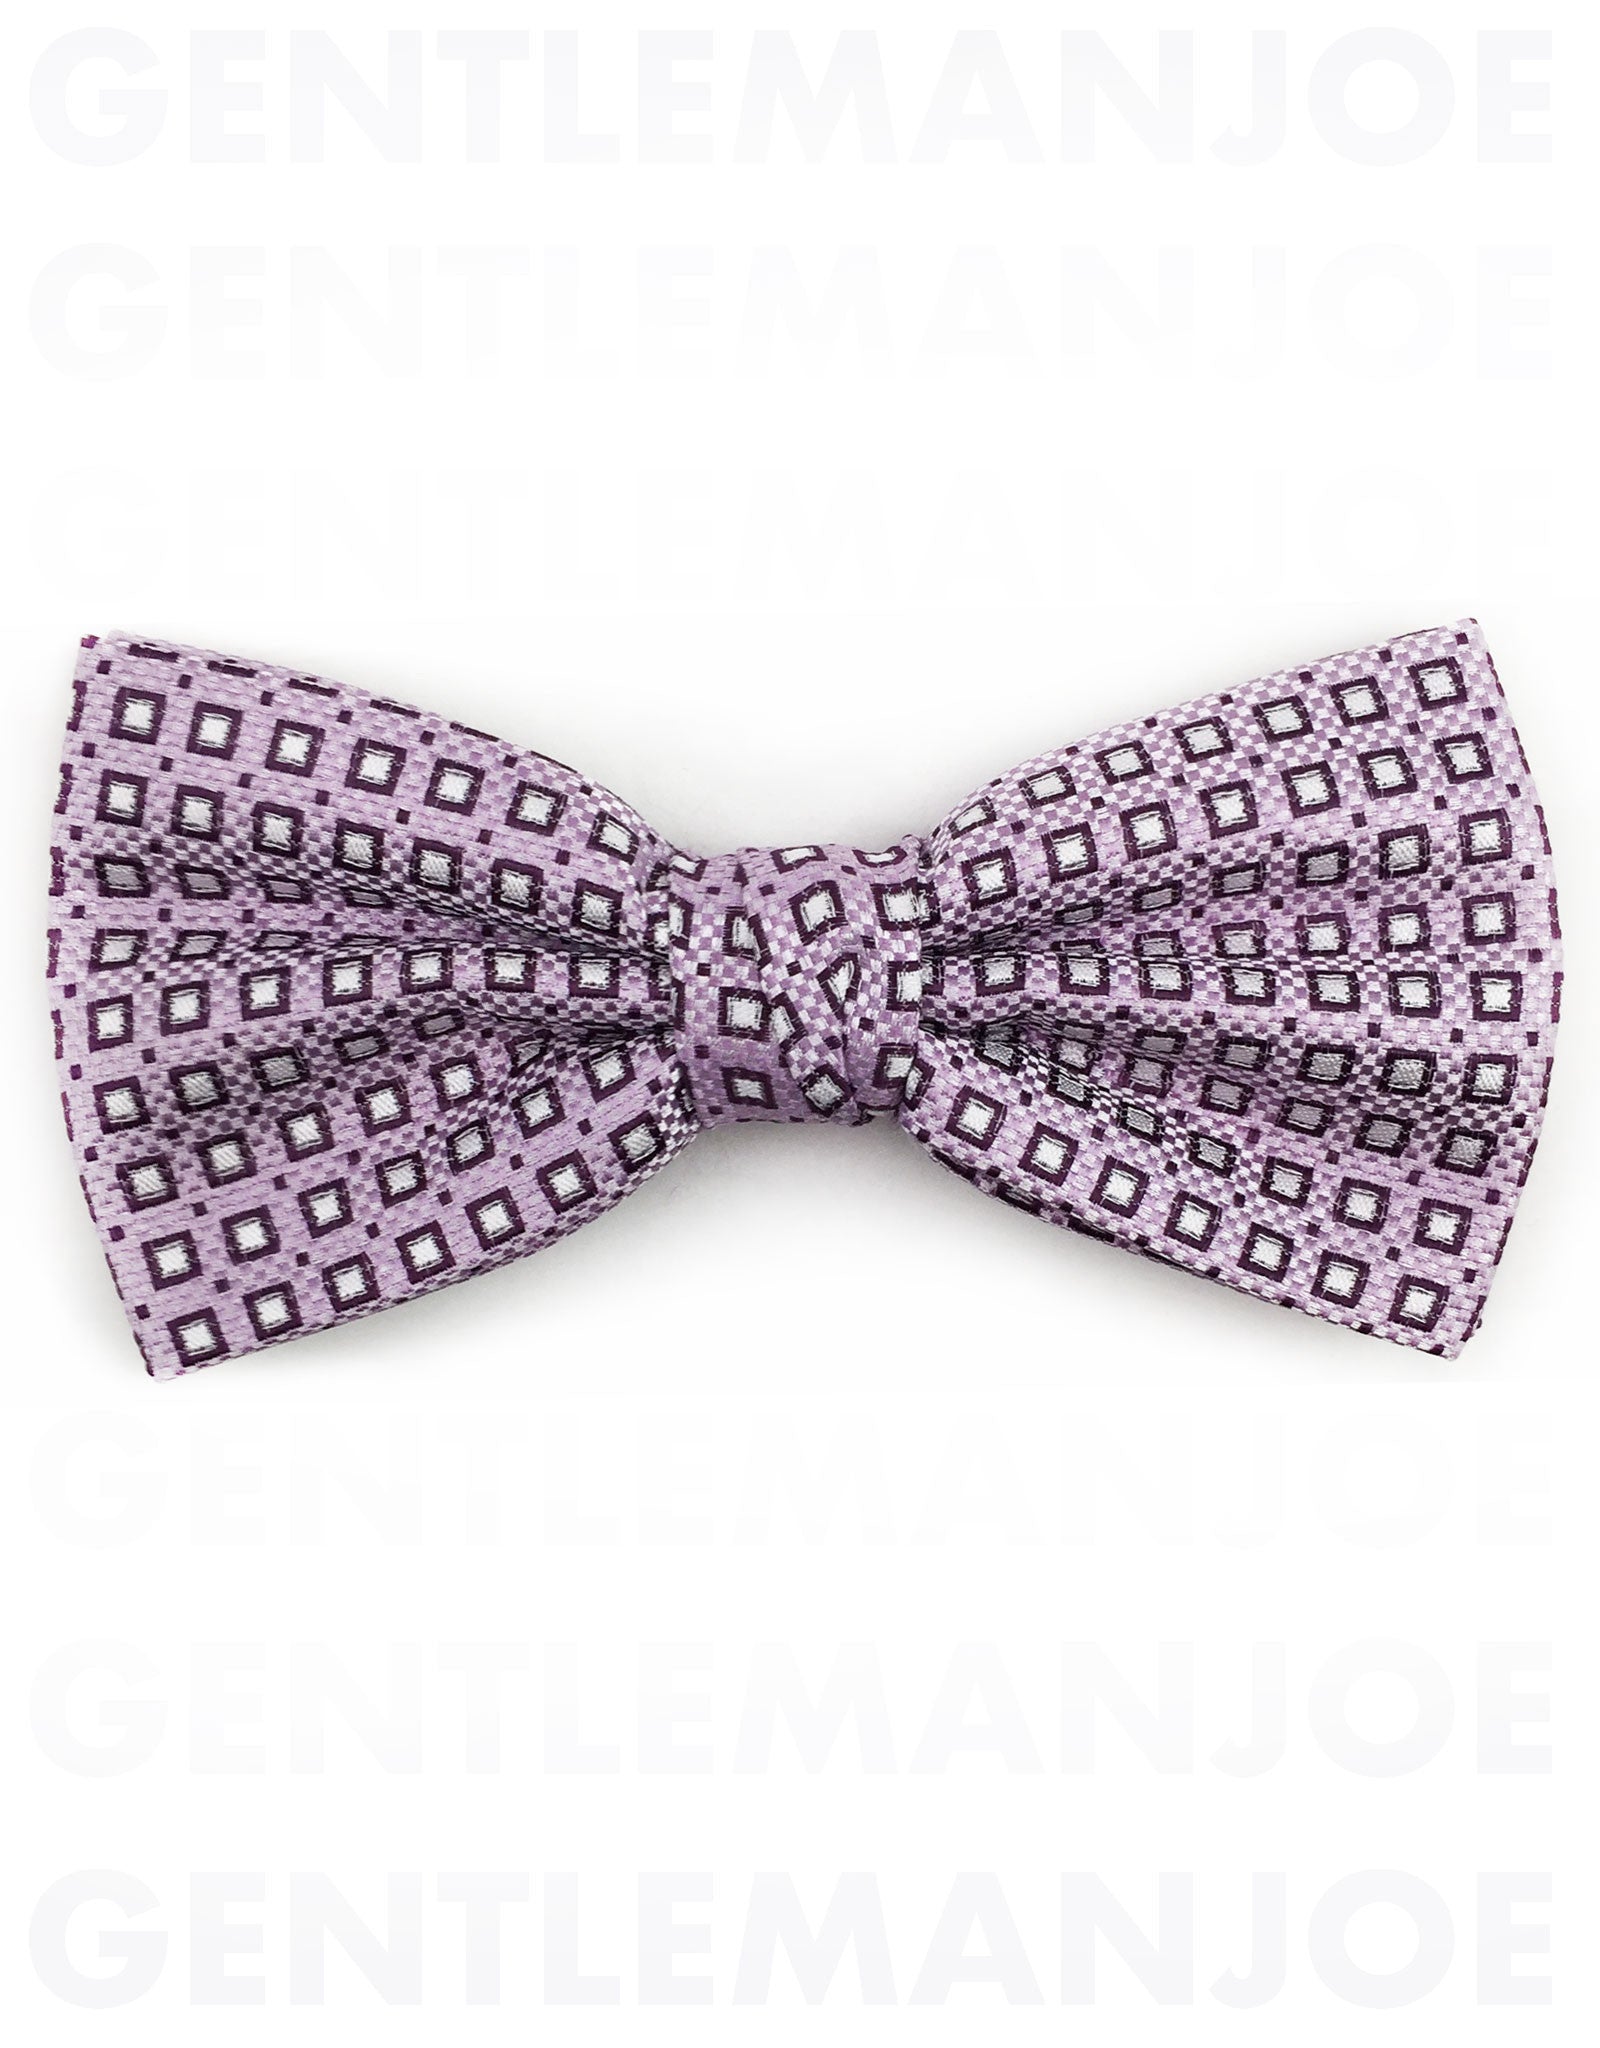 Lilac purple bow tie